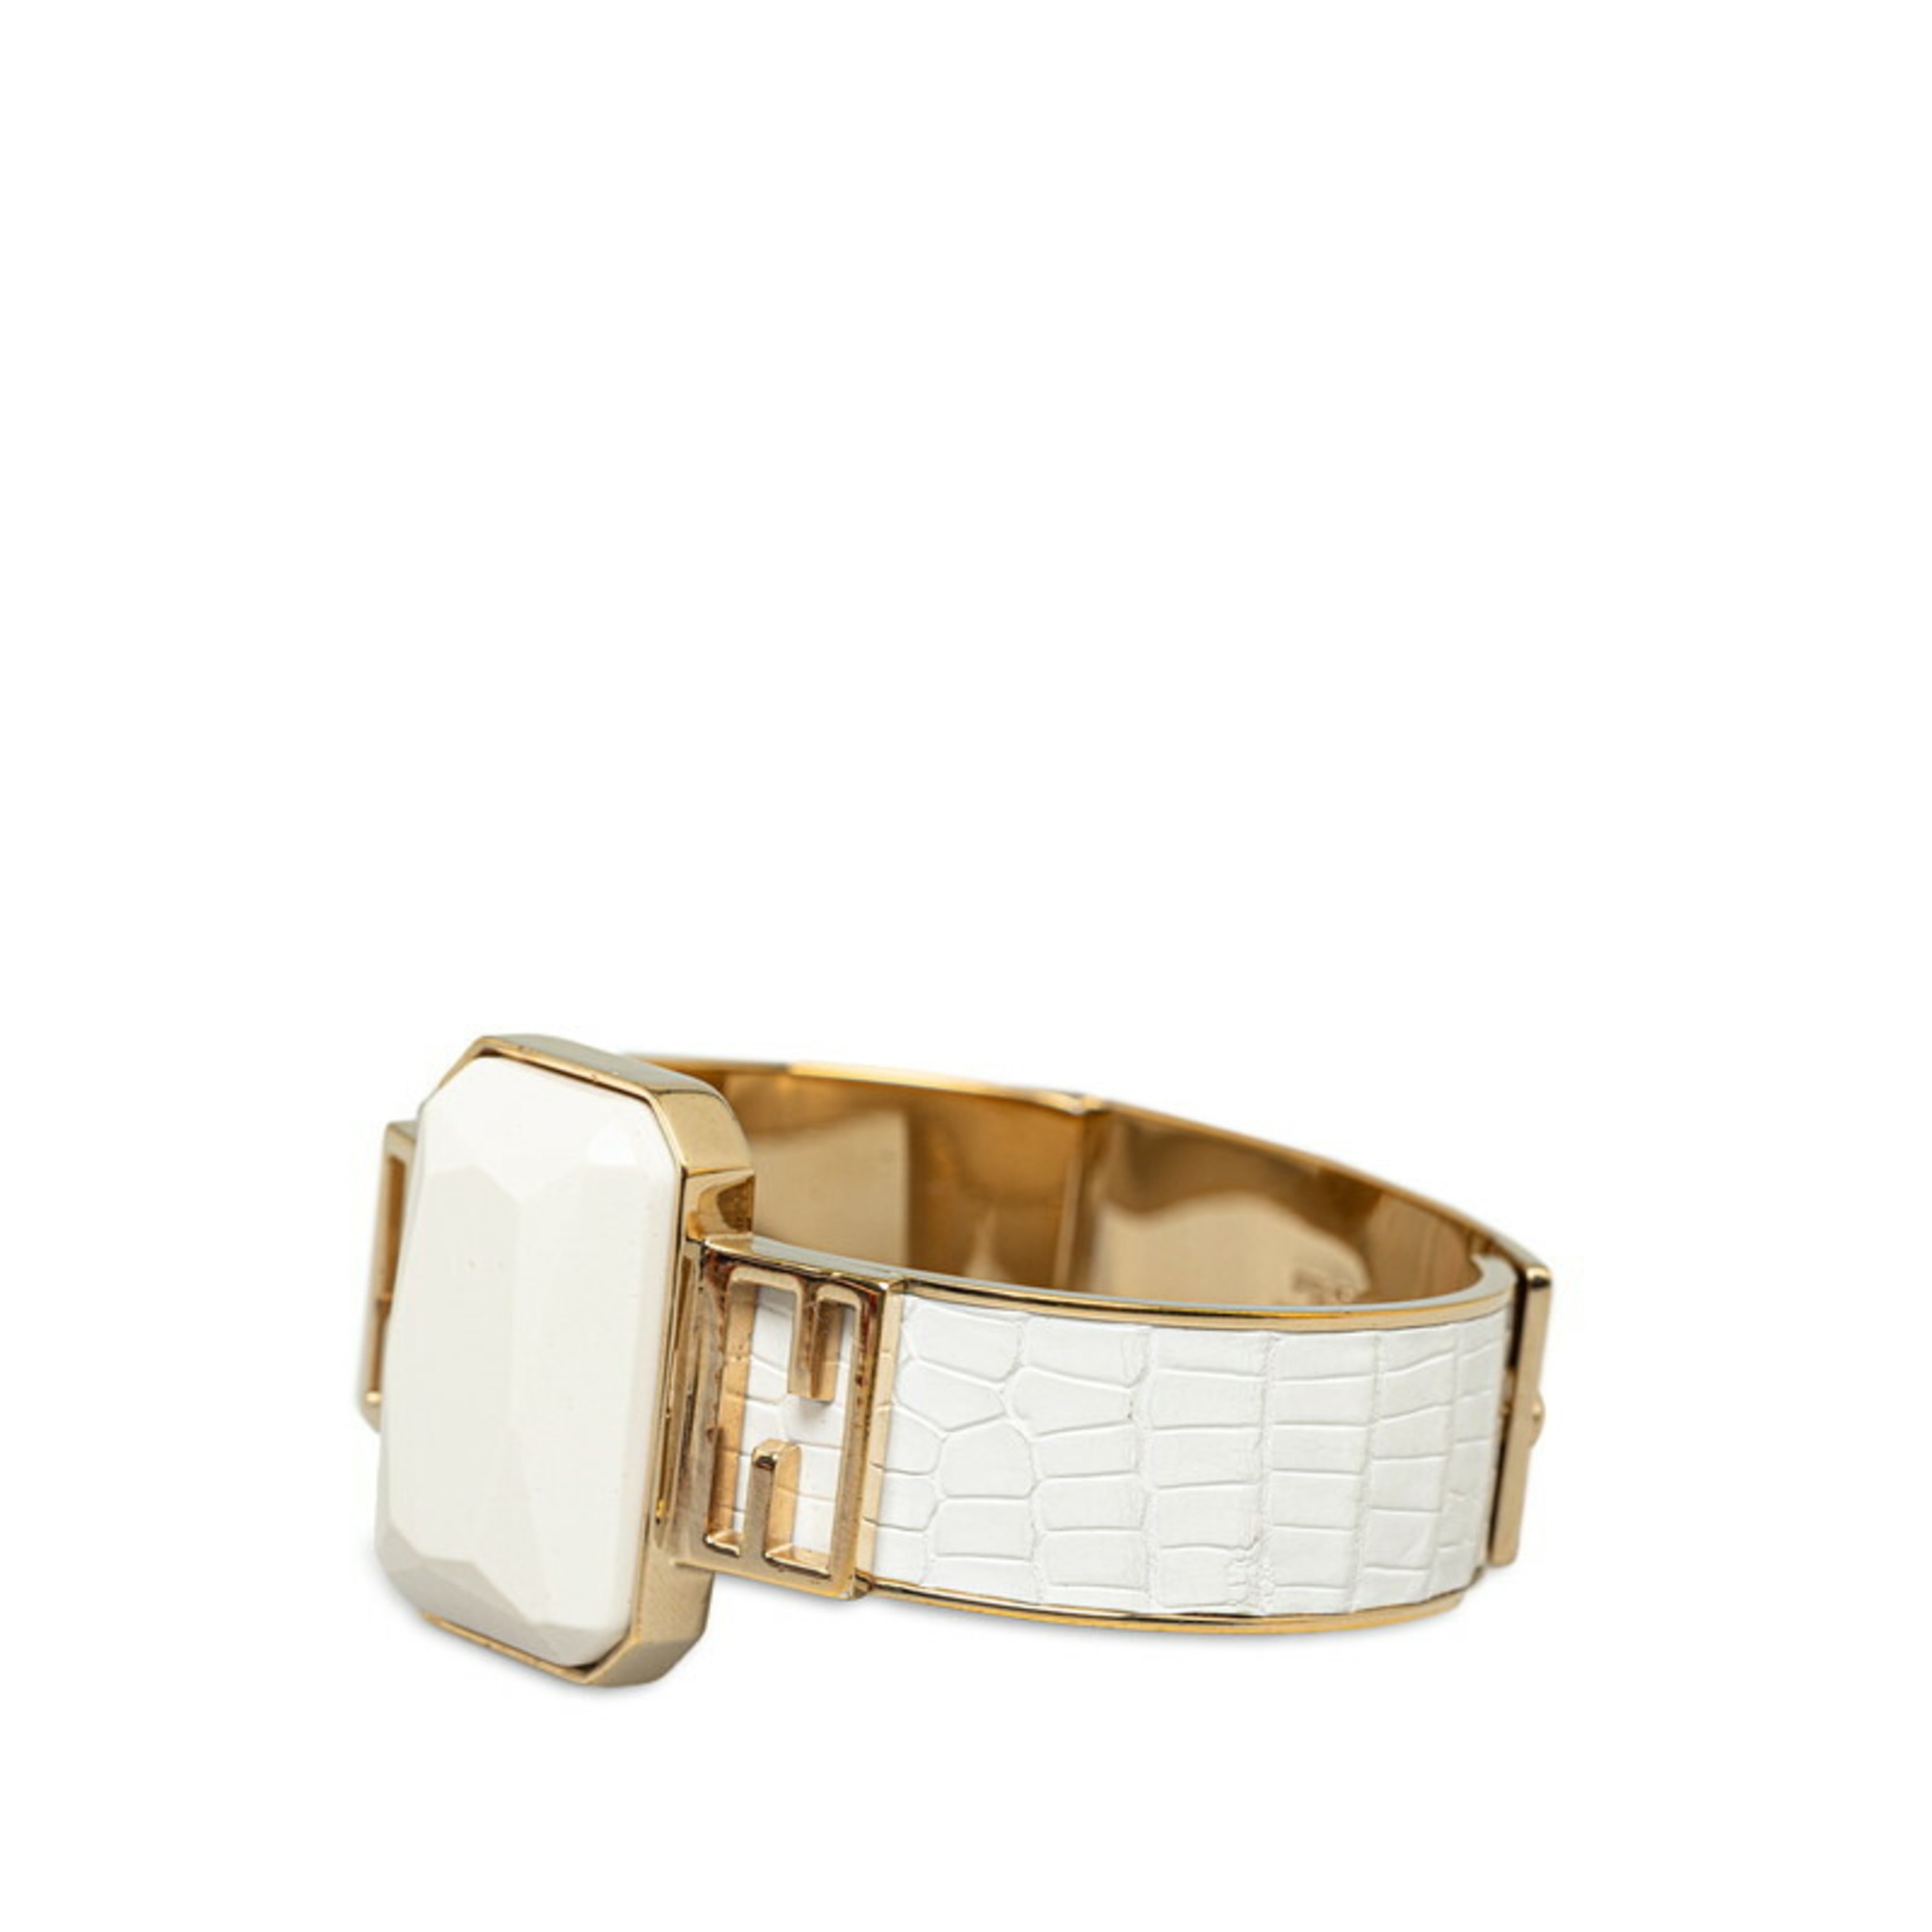 FENDI Bracelet Bangle White Gold Plated Leather Women's